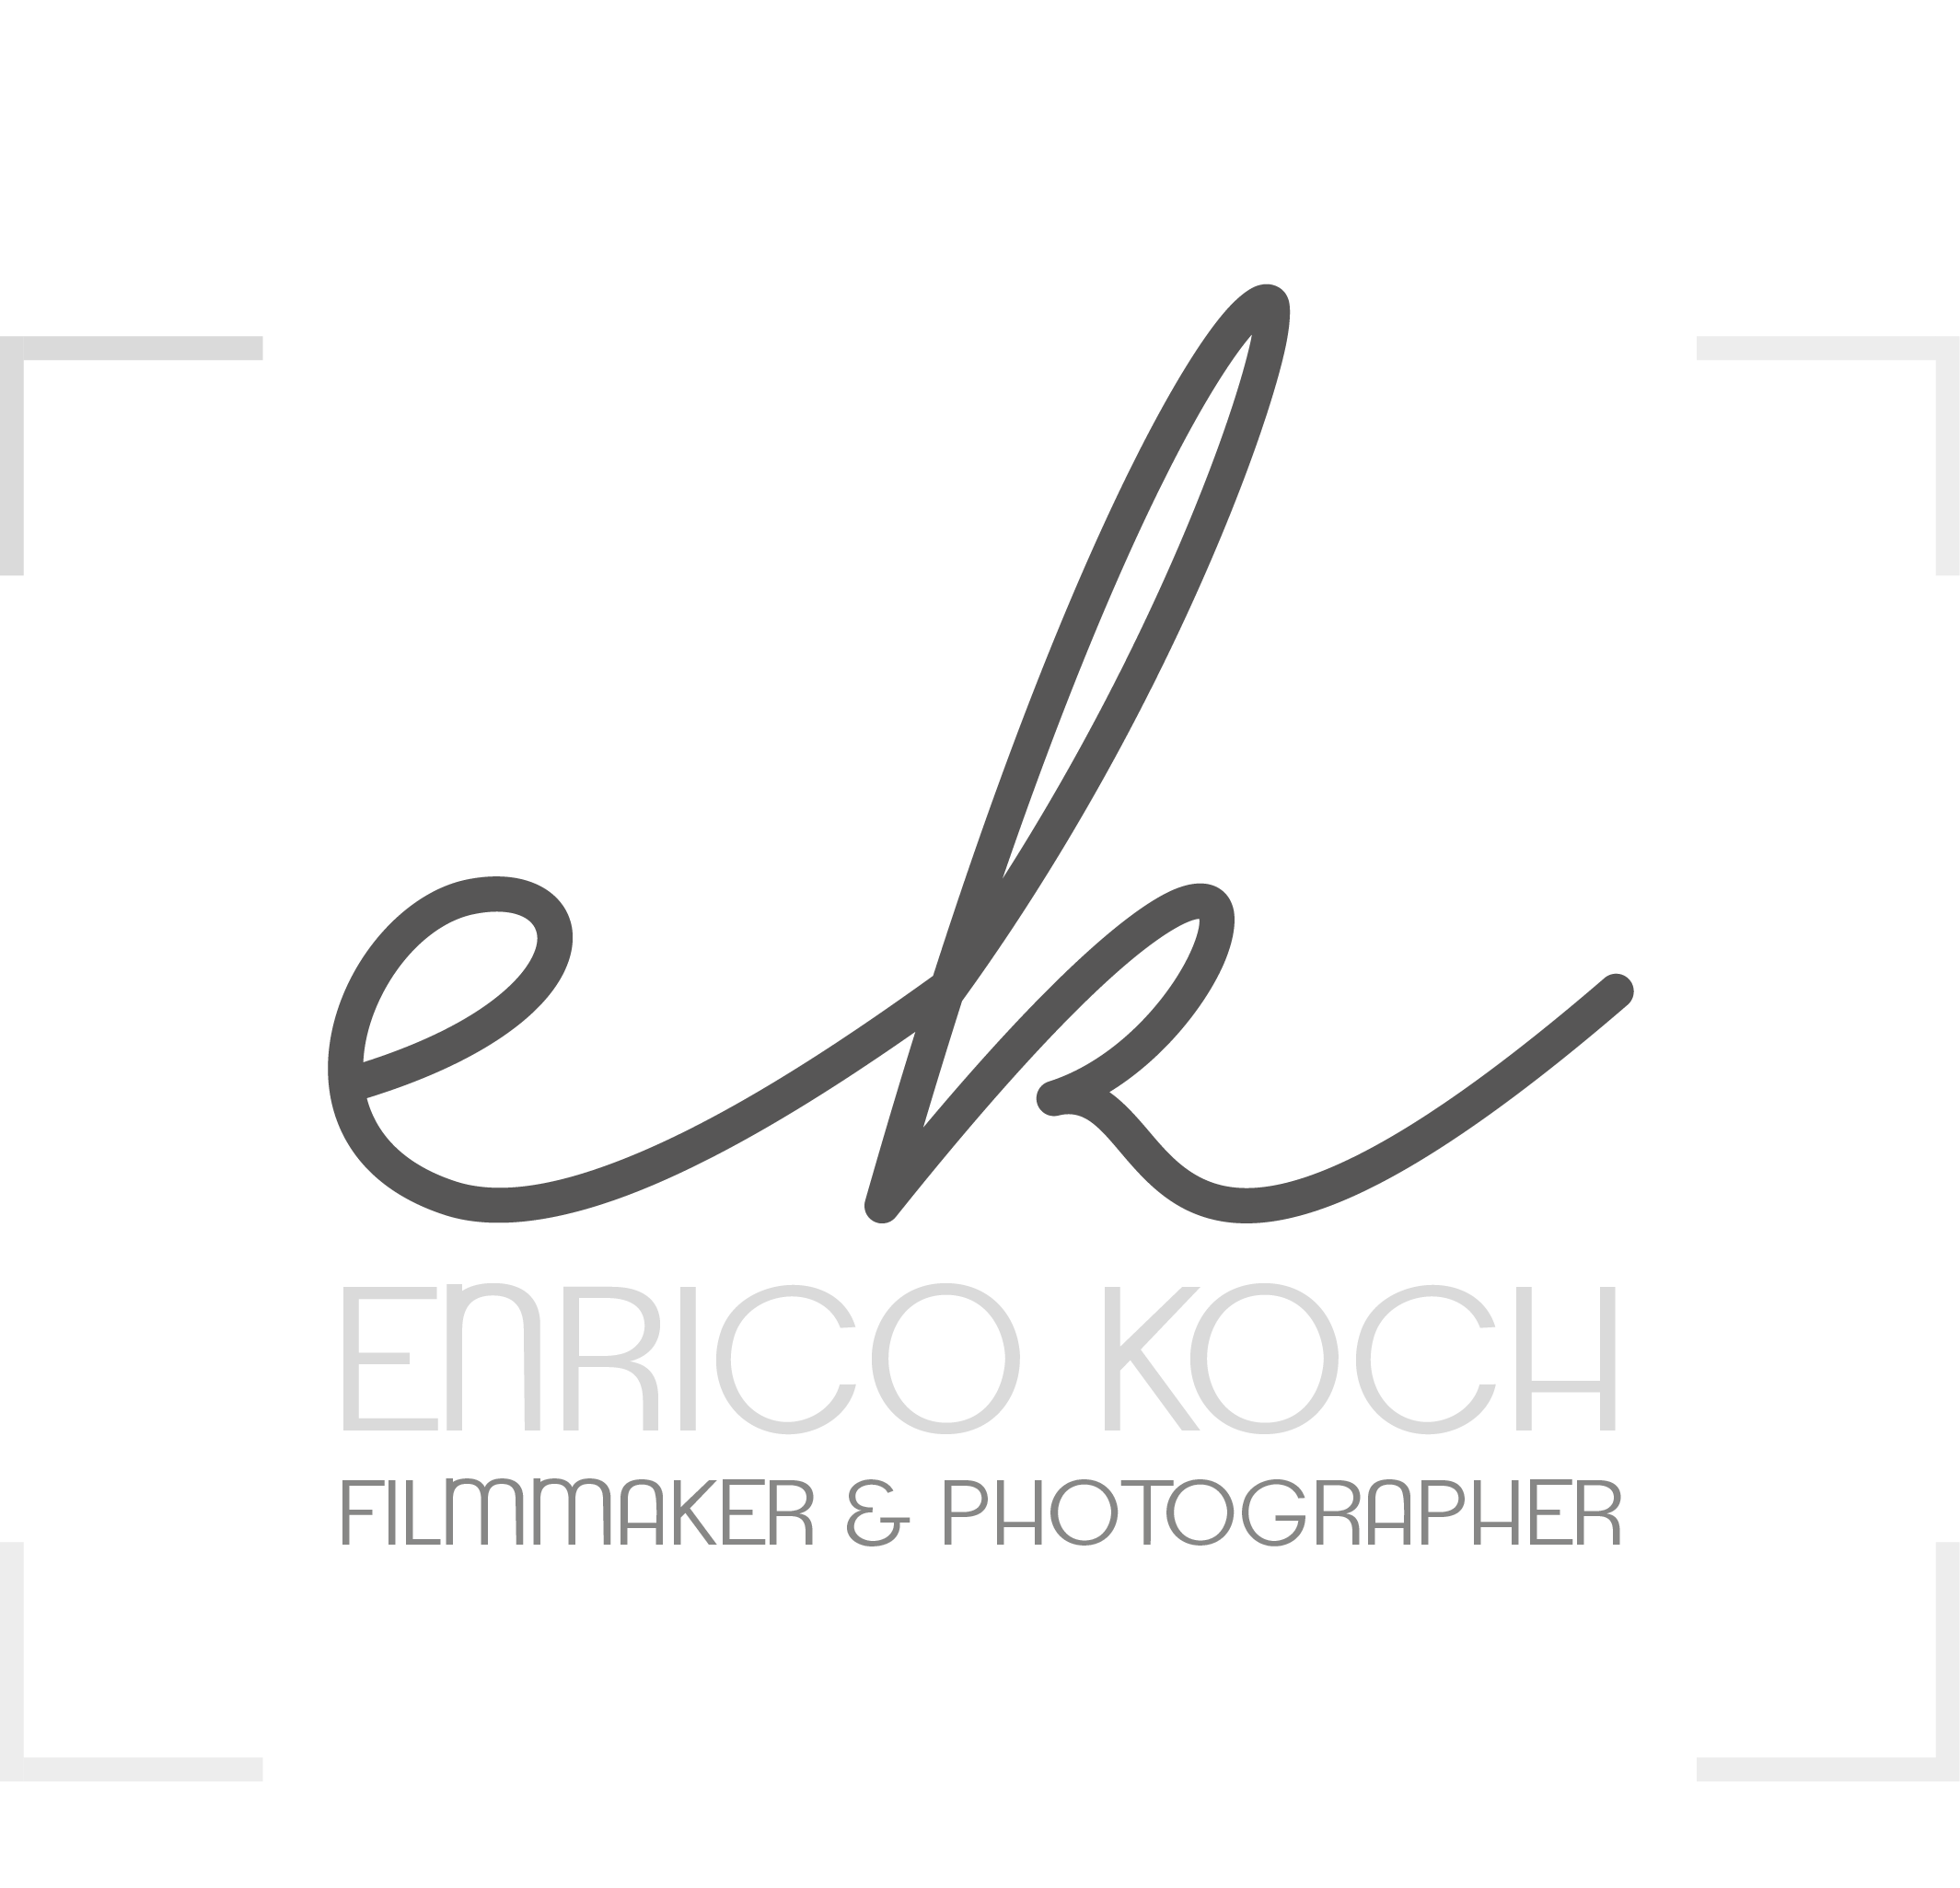 Enrico Koch - Filmmaker & Photographer